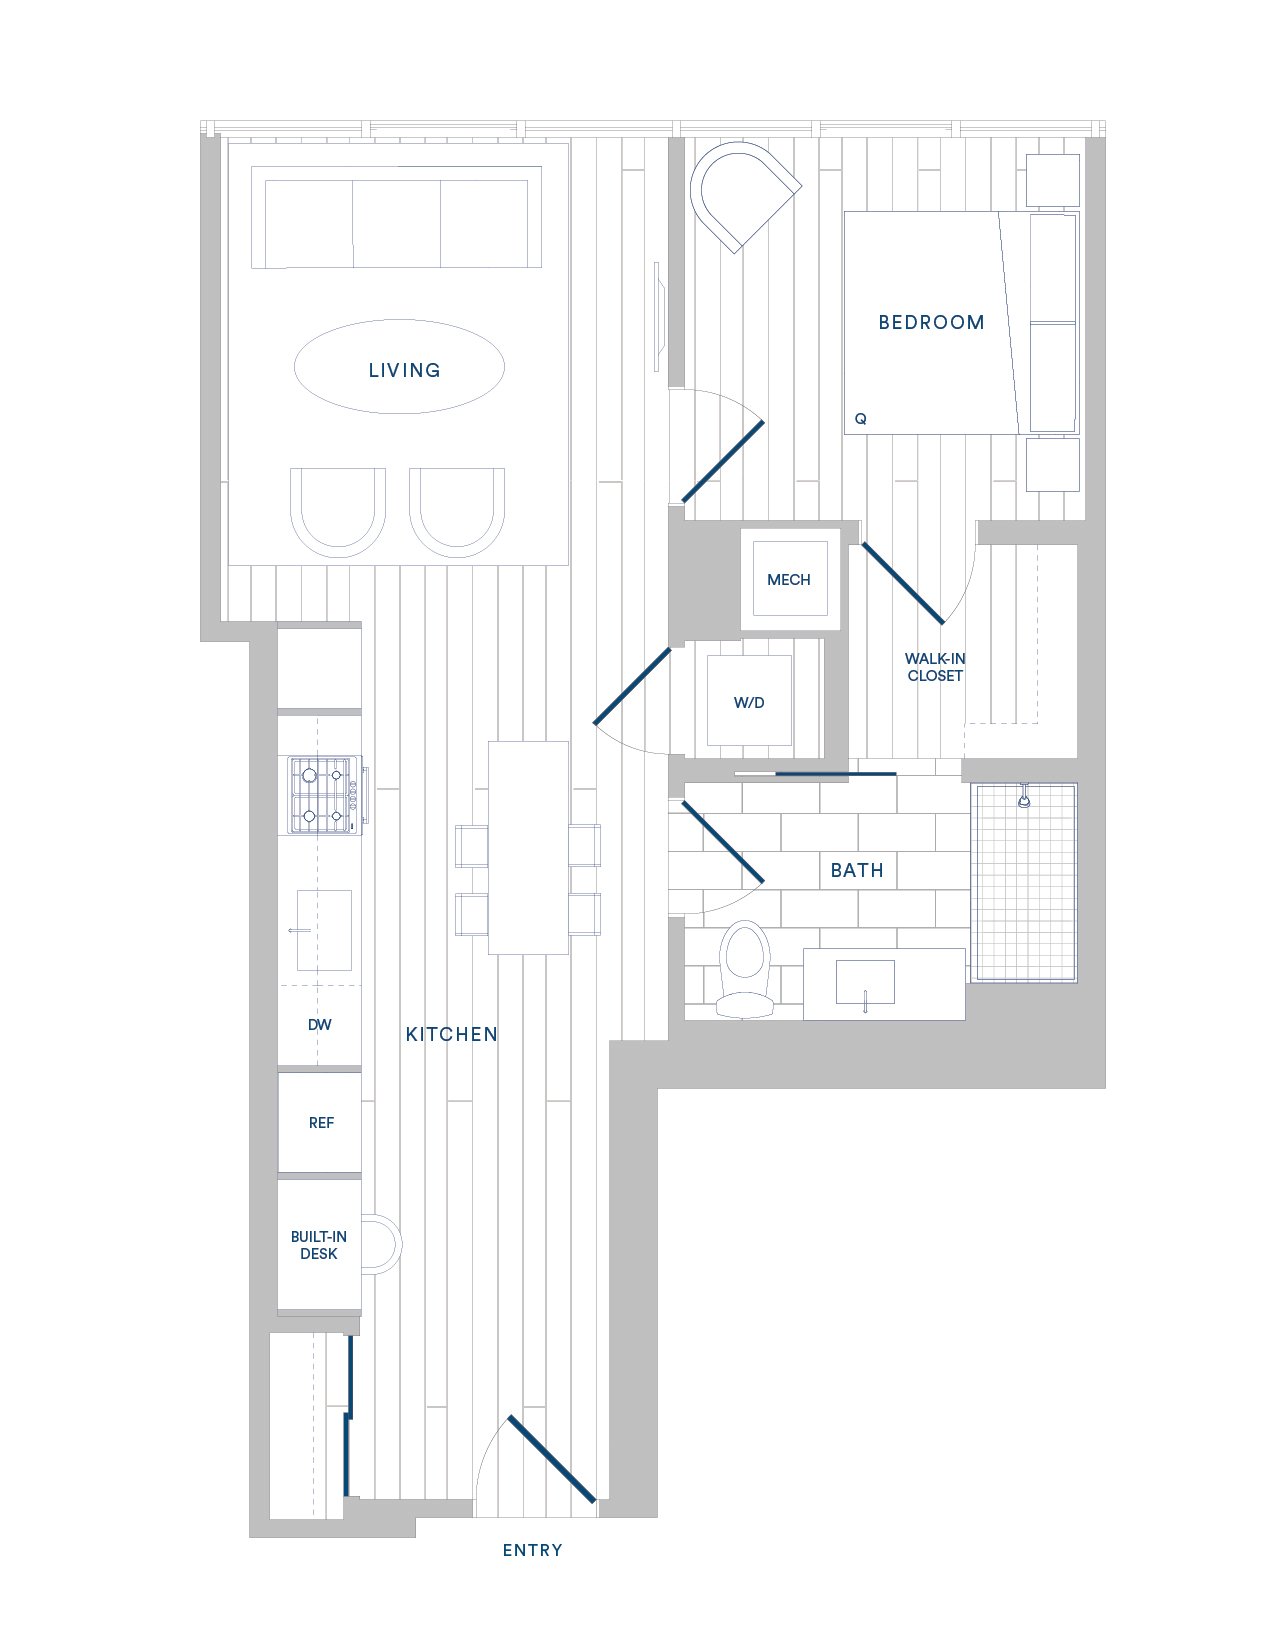 Floorplan for Apartment #1217, 1 bedroom unit at Margarite